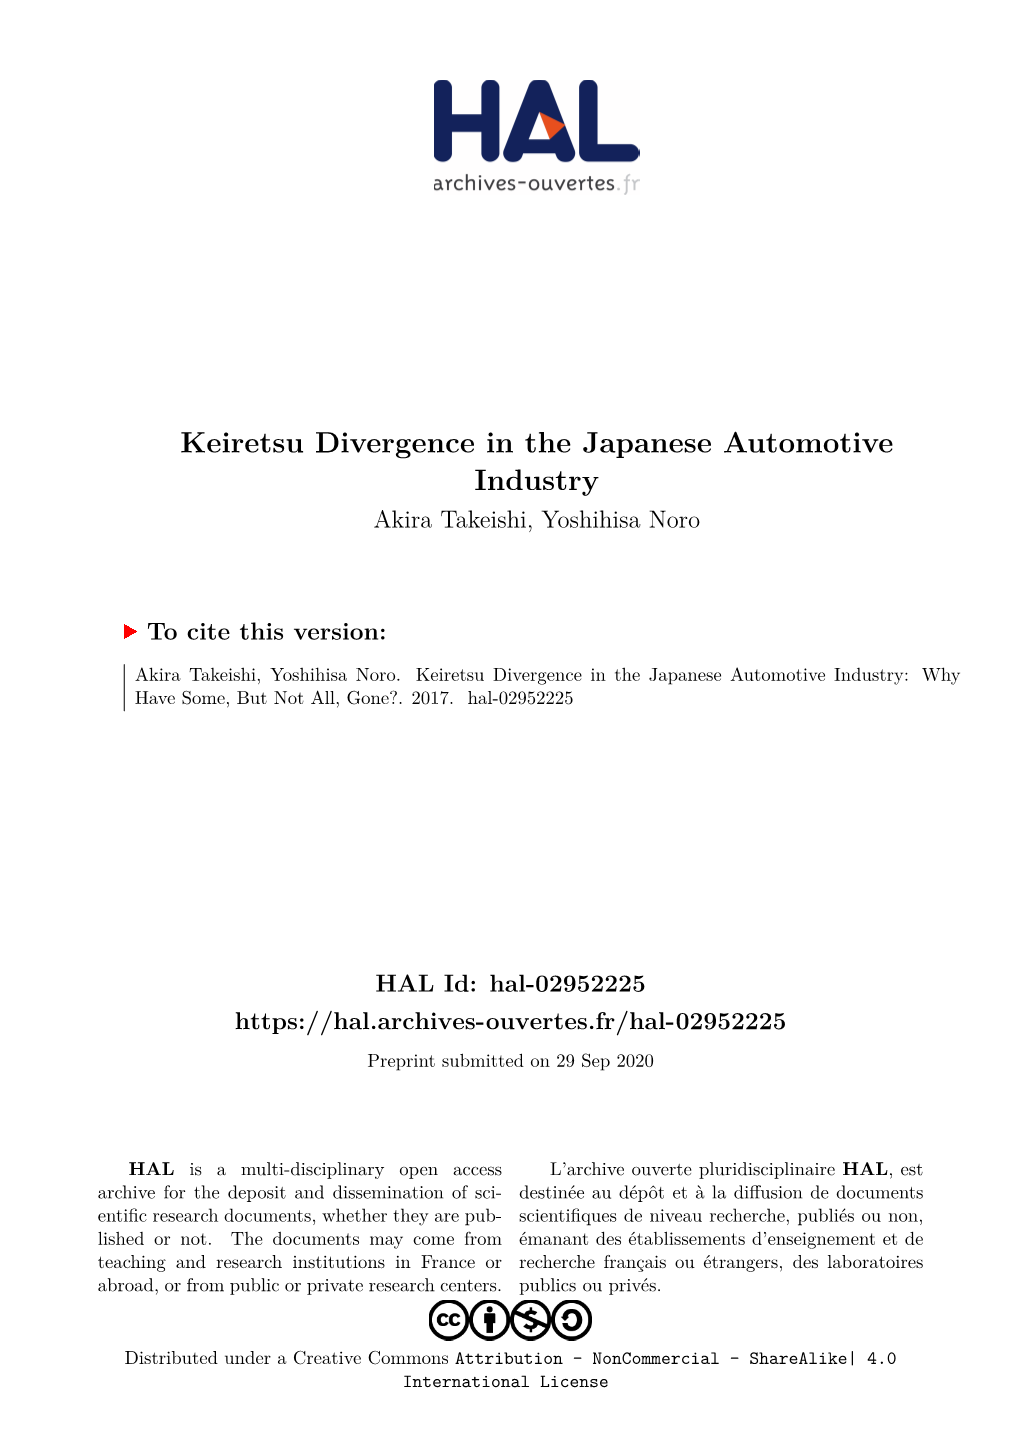 Keiretsu Divergence in the Japanese Automotive Industry Akira Takeishi, Yoshihisa Noro